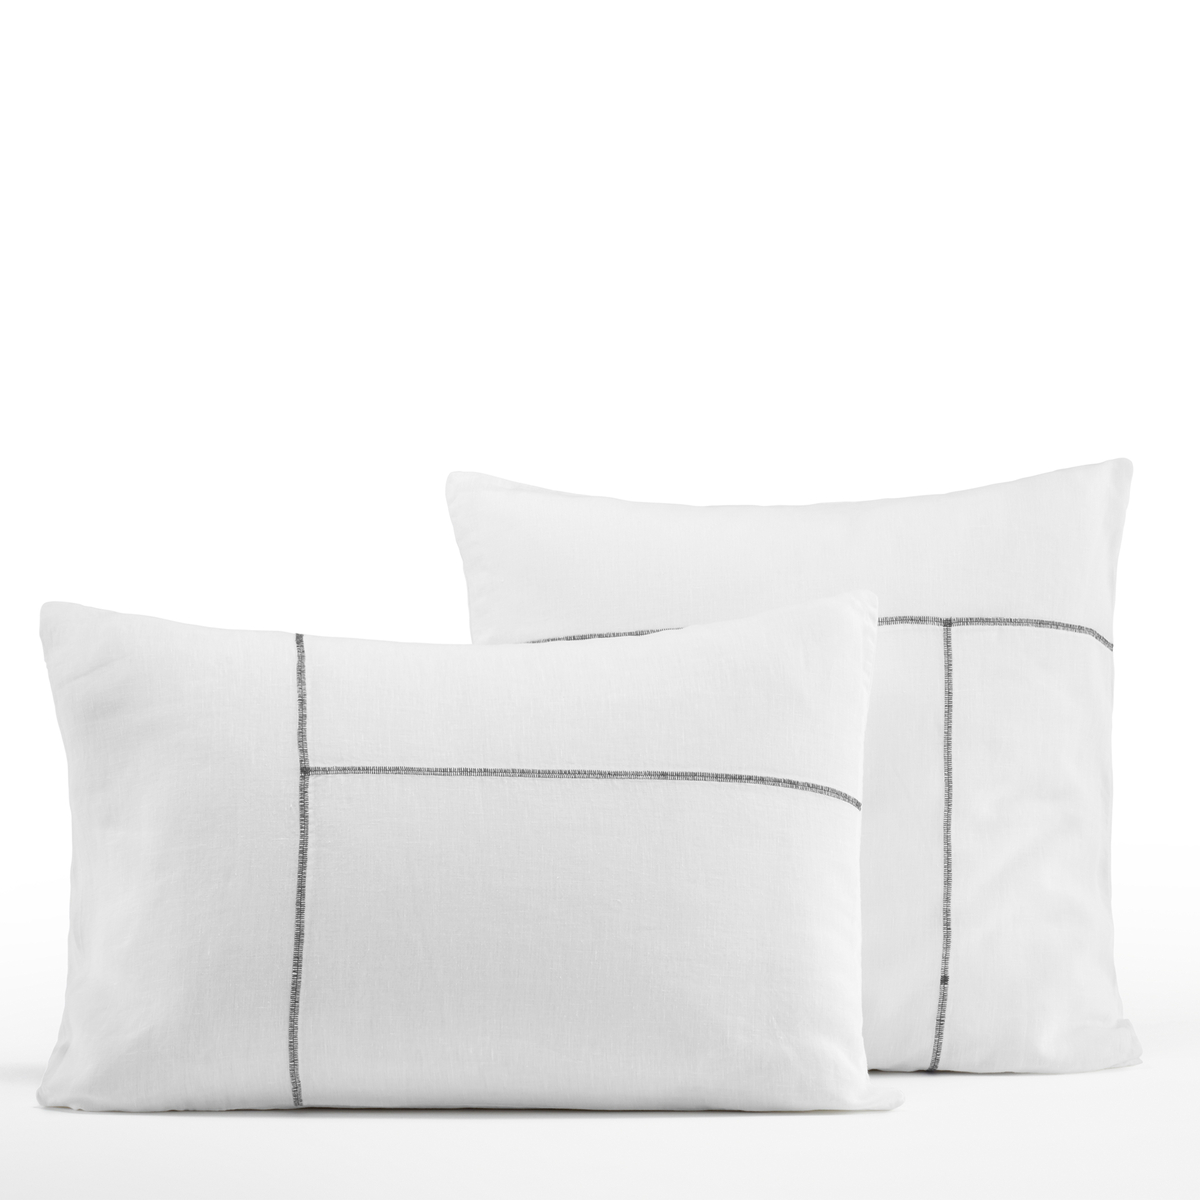 Melki 100% Washed Linen Pillowcase